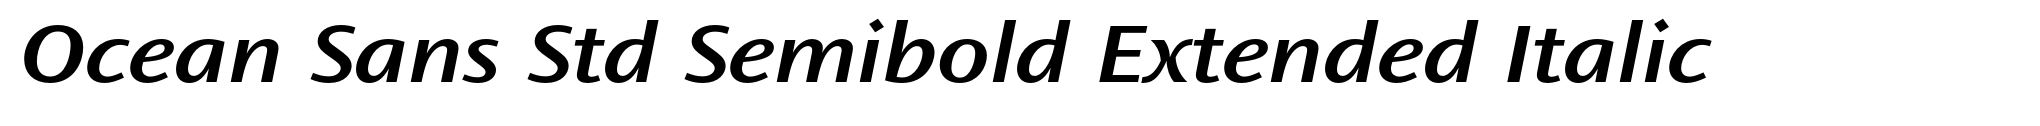 Ocean Sans Std Semibold Extended Italic image